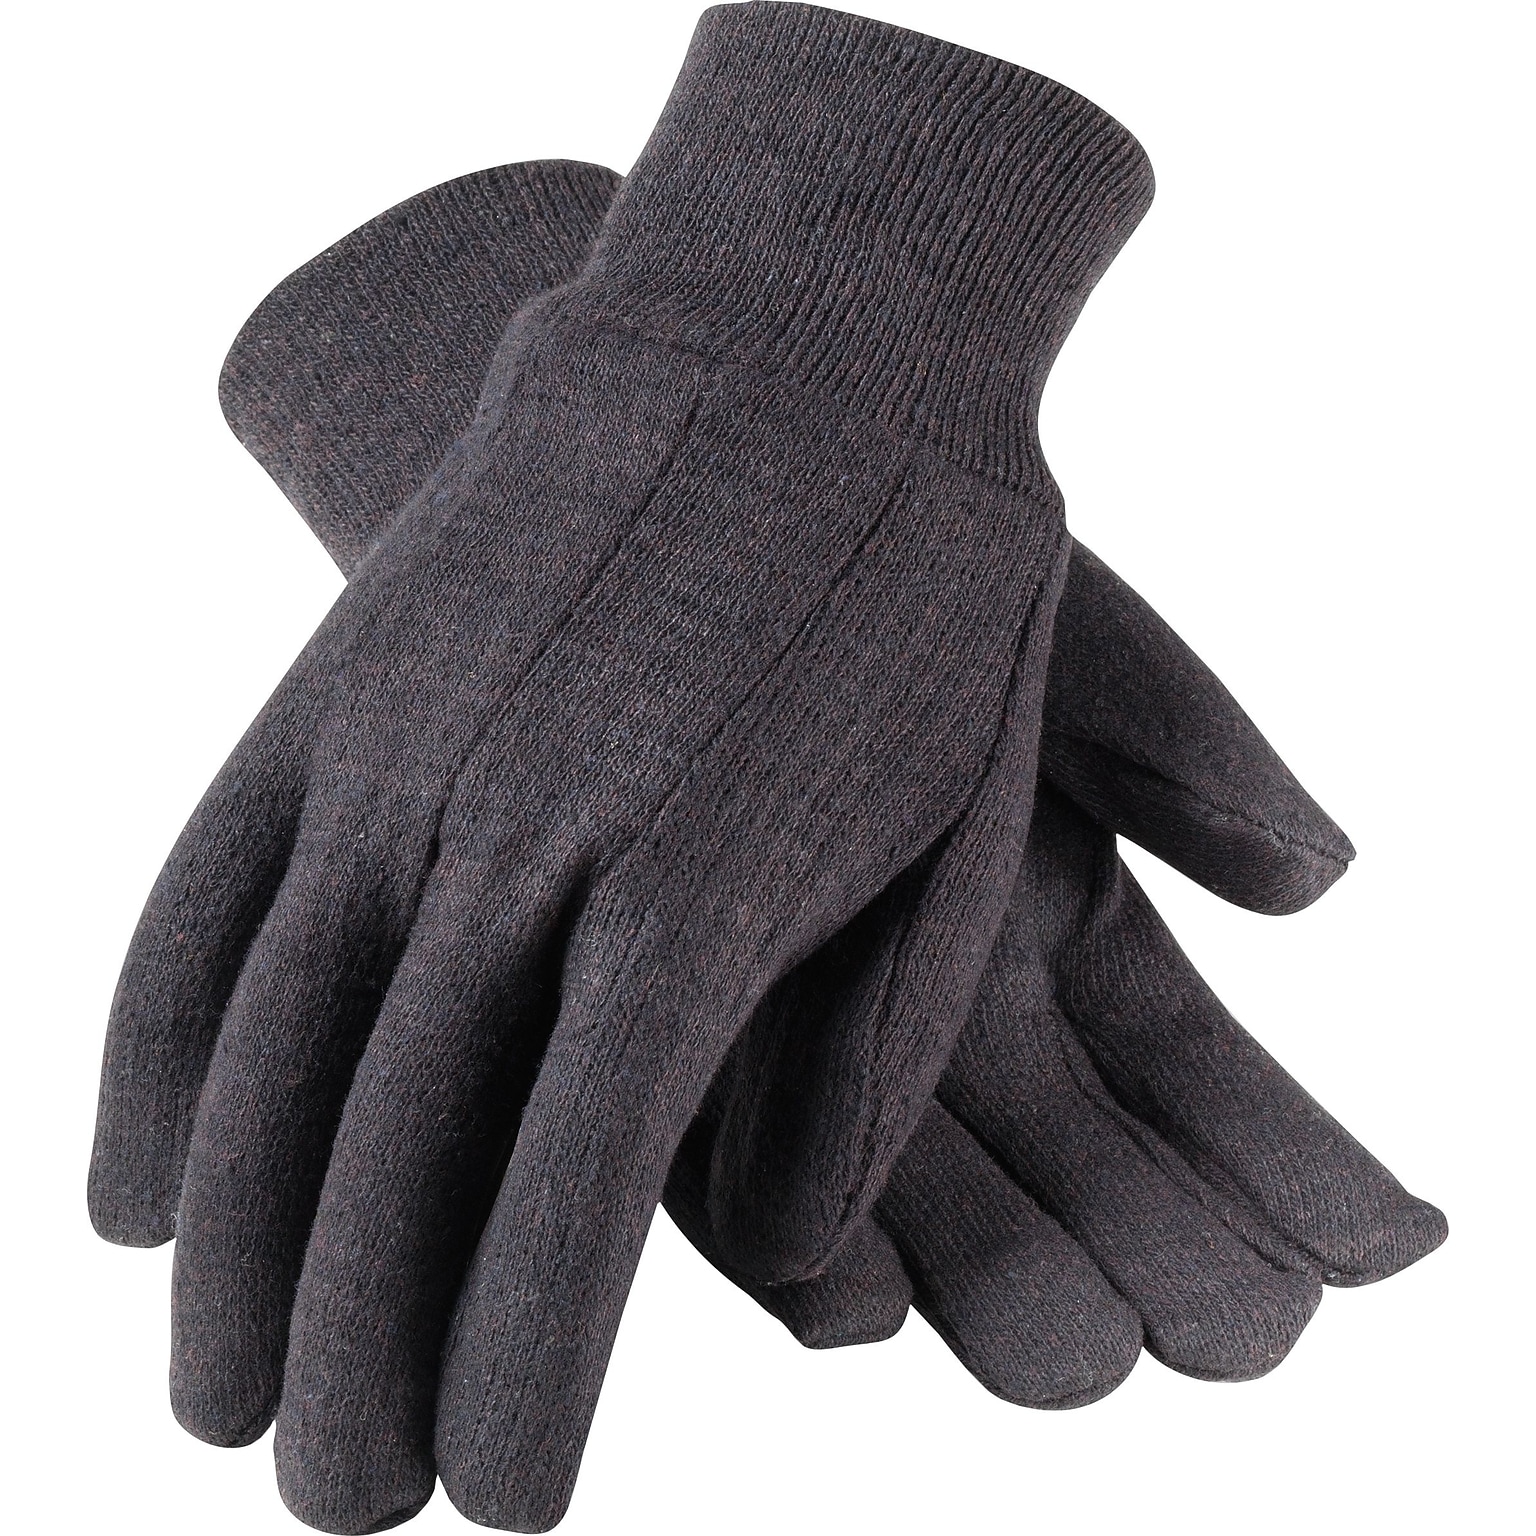 PIP® Knit Work Gloves, Cotton Jersey With Knit Wrists, One Size, Dozen (95-806)